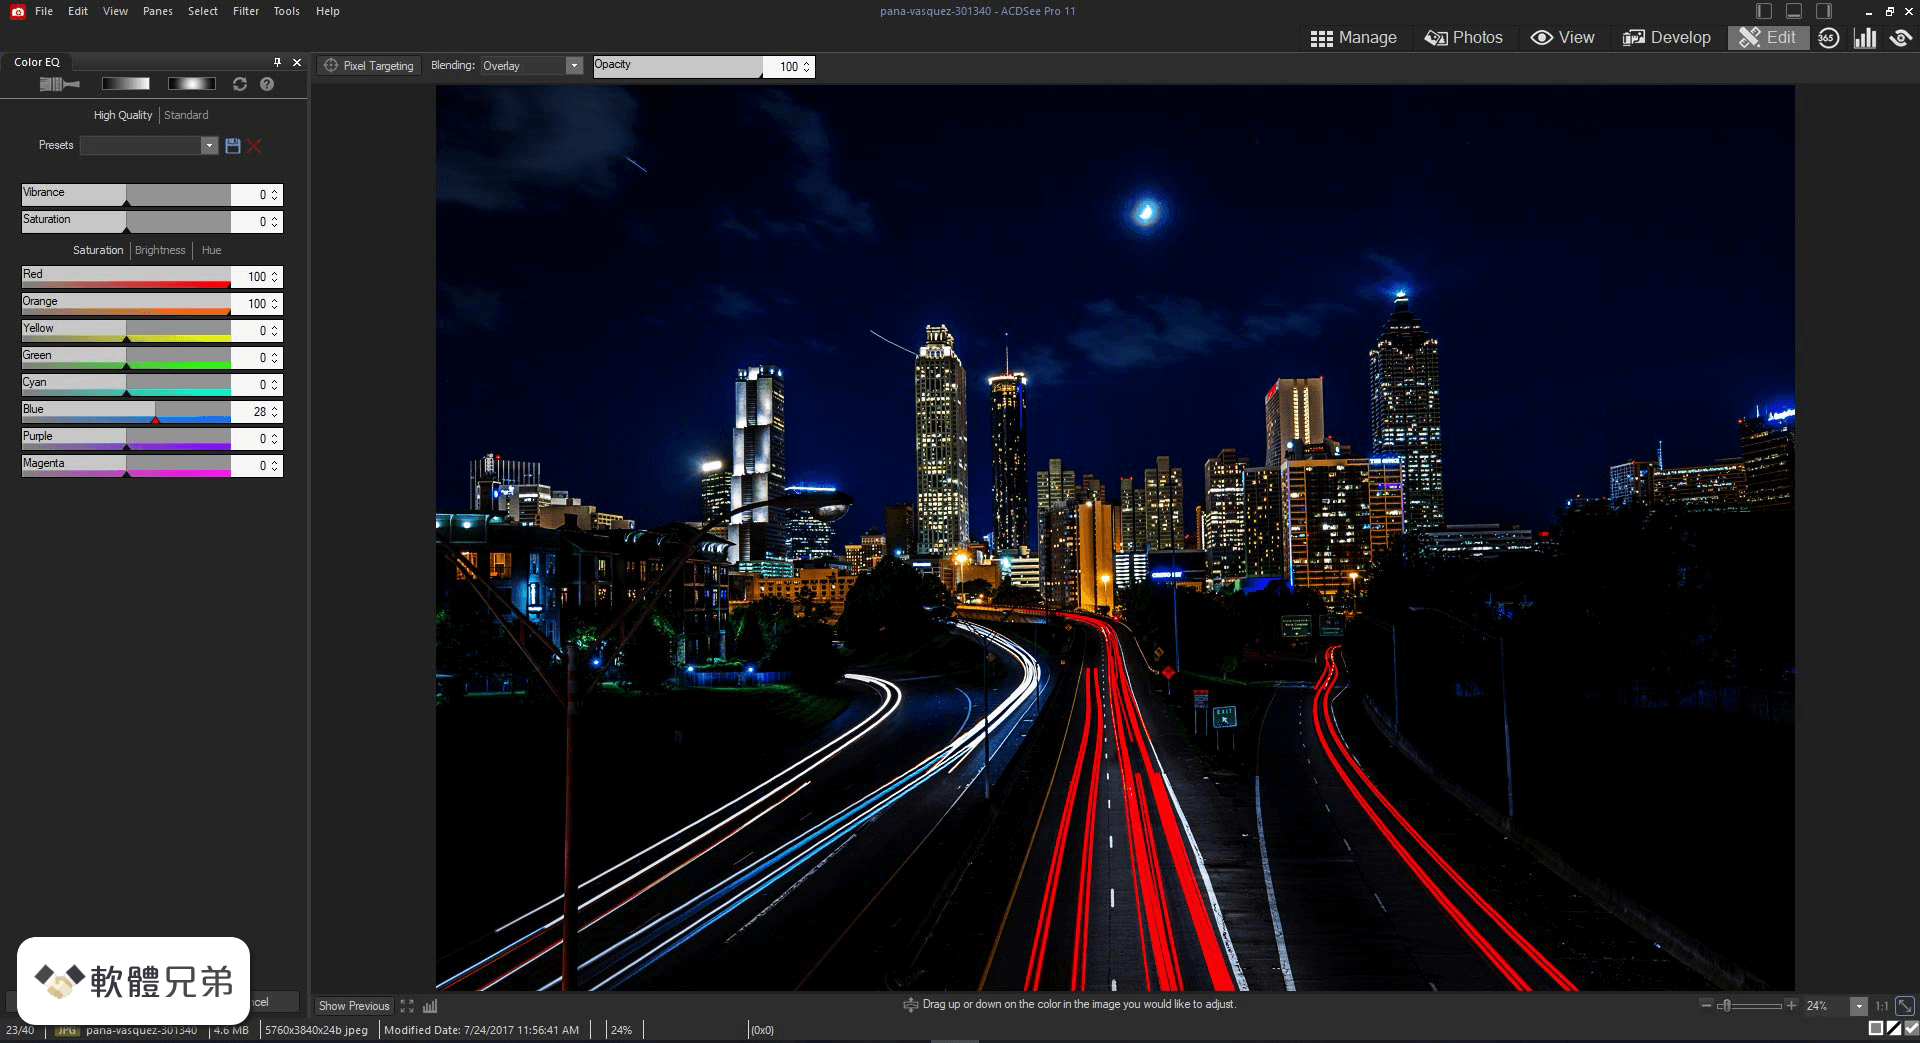 ACDSee Photo Studio Professional (64-bit) Screenshot 5